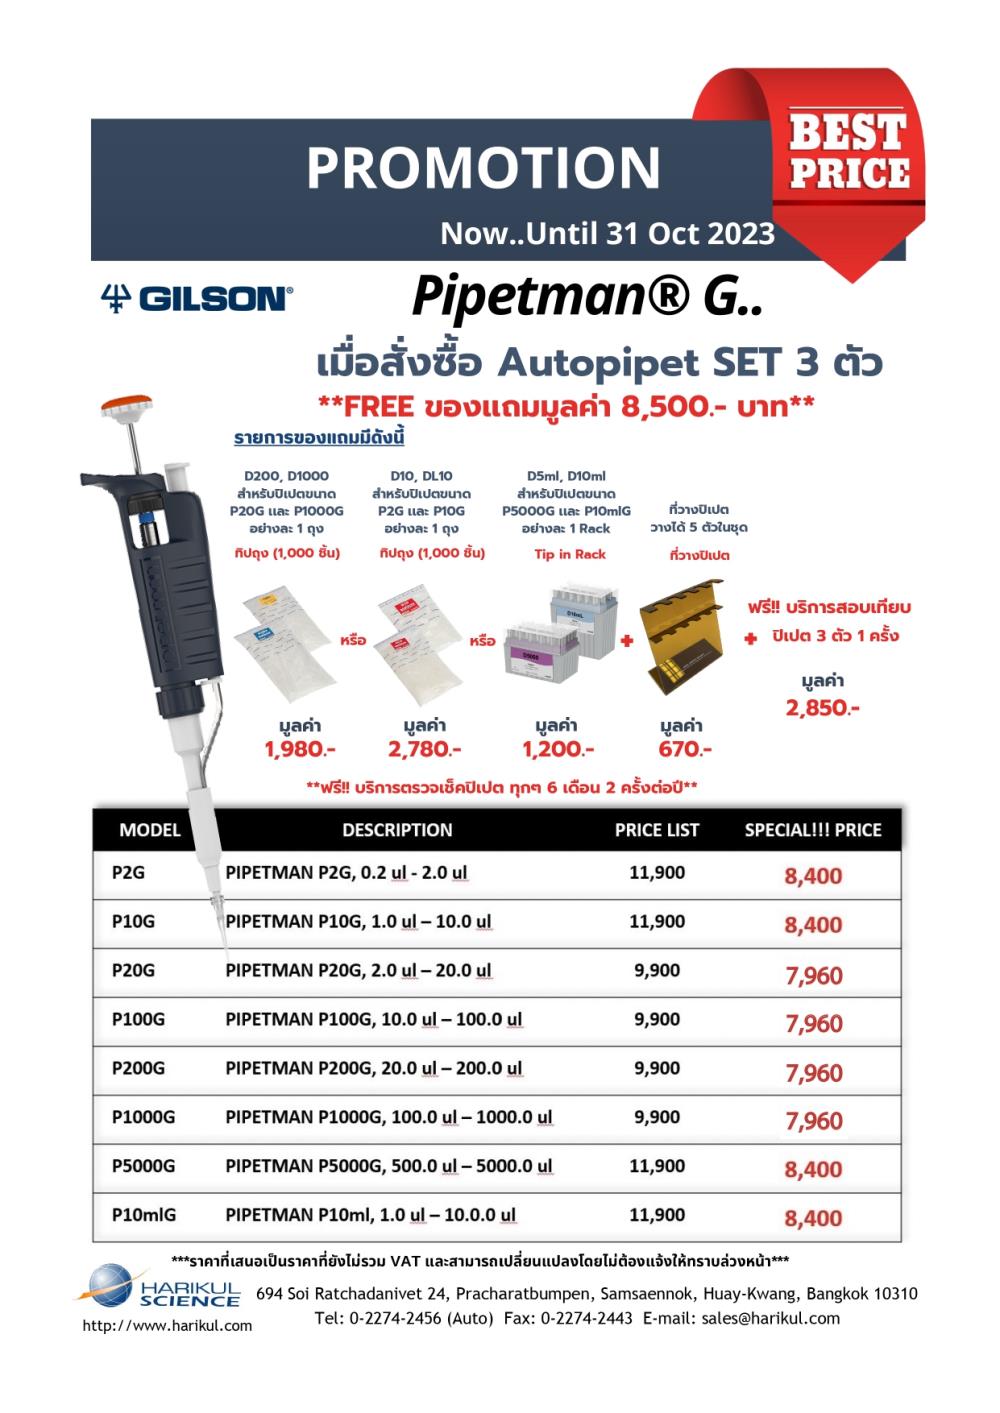 PIPETMAN G,ชุดดูดจ่ายสารละลายอัตโนมัติ ,Gilson,Instruments and Controls/Laboratory Equipment